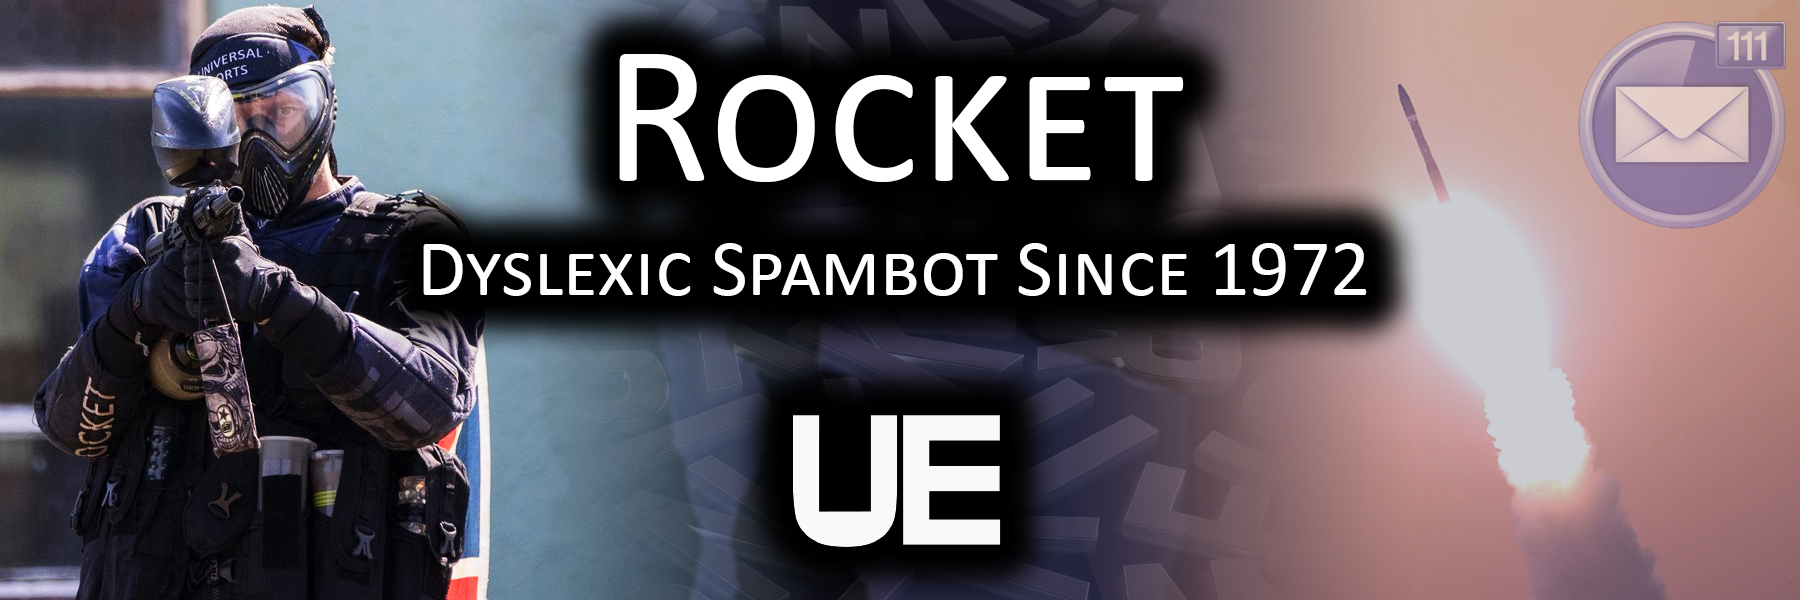 Rocket - Dyslexic Spambot Since 1972